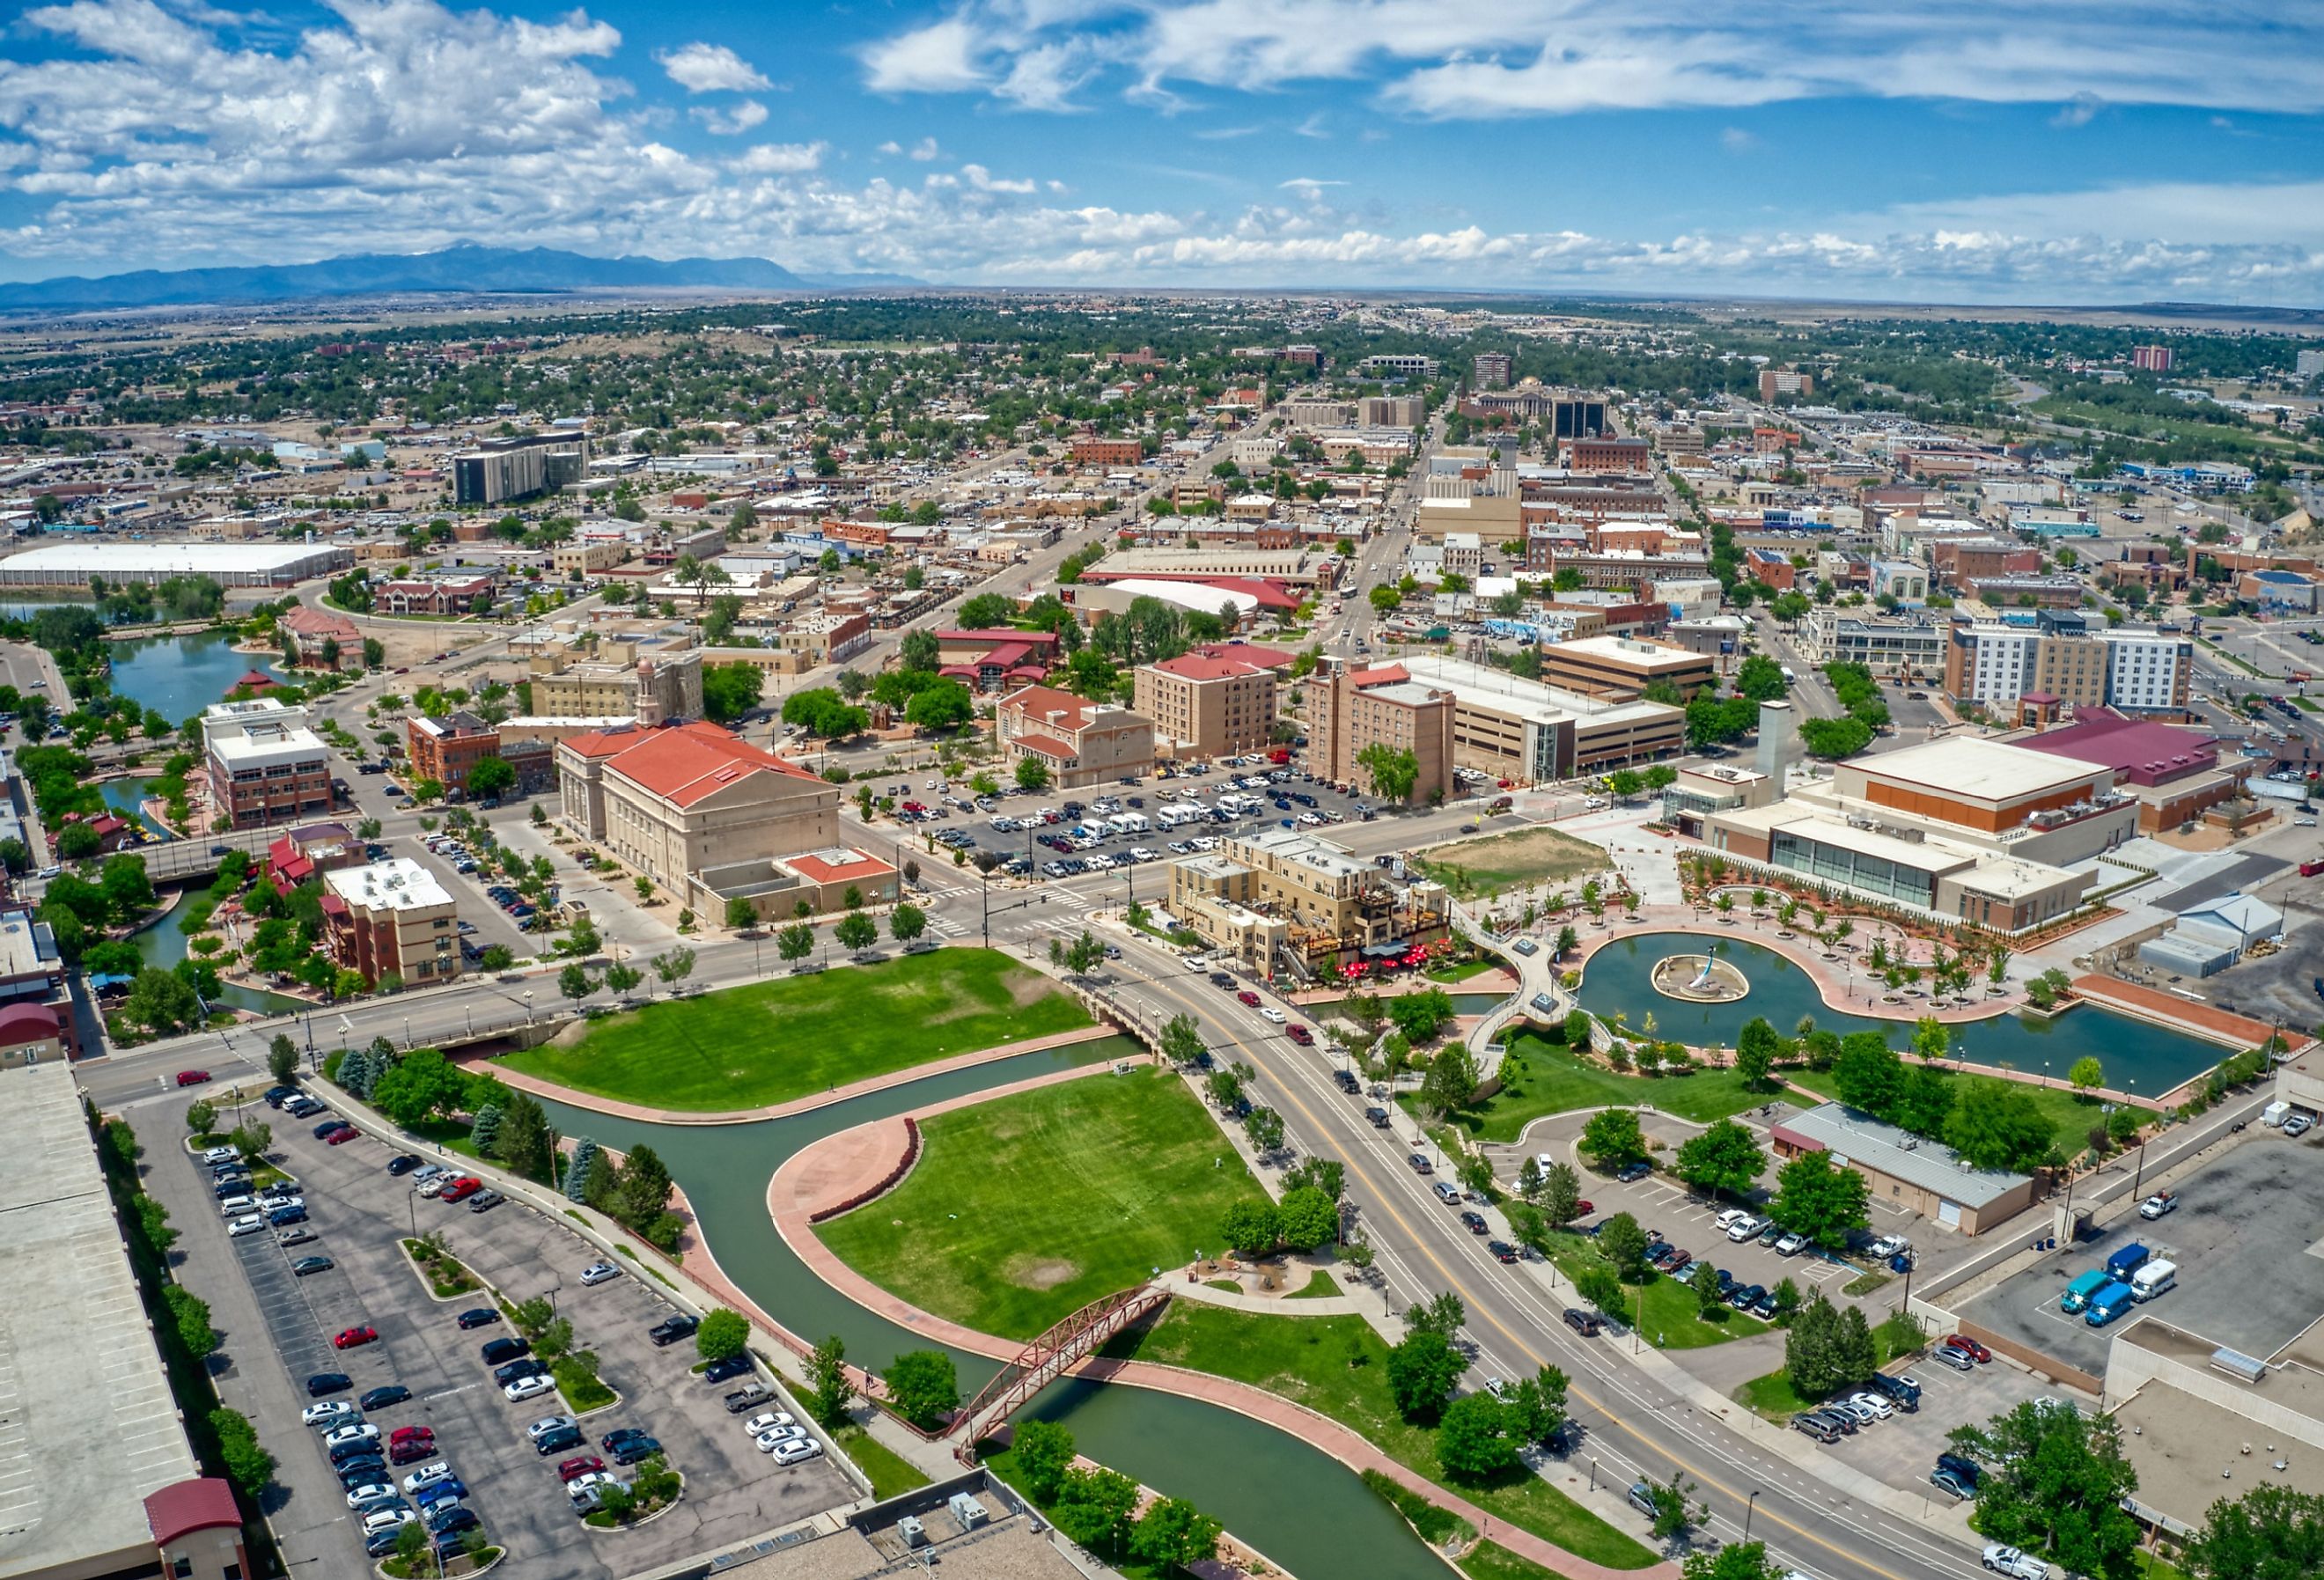 Downtown Pueblo, Colorado during Summer. Image credit Jacob Boomsma via Shutterstock